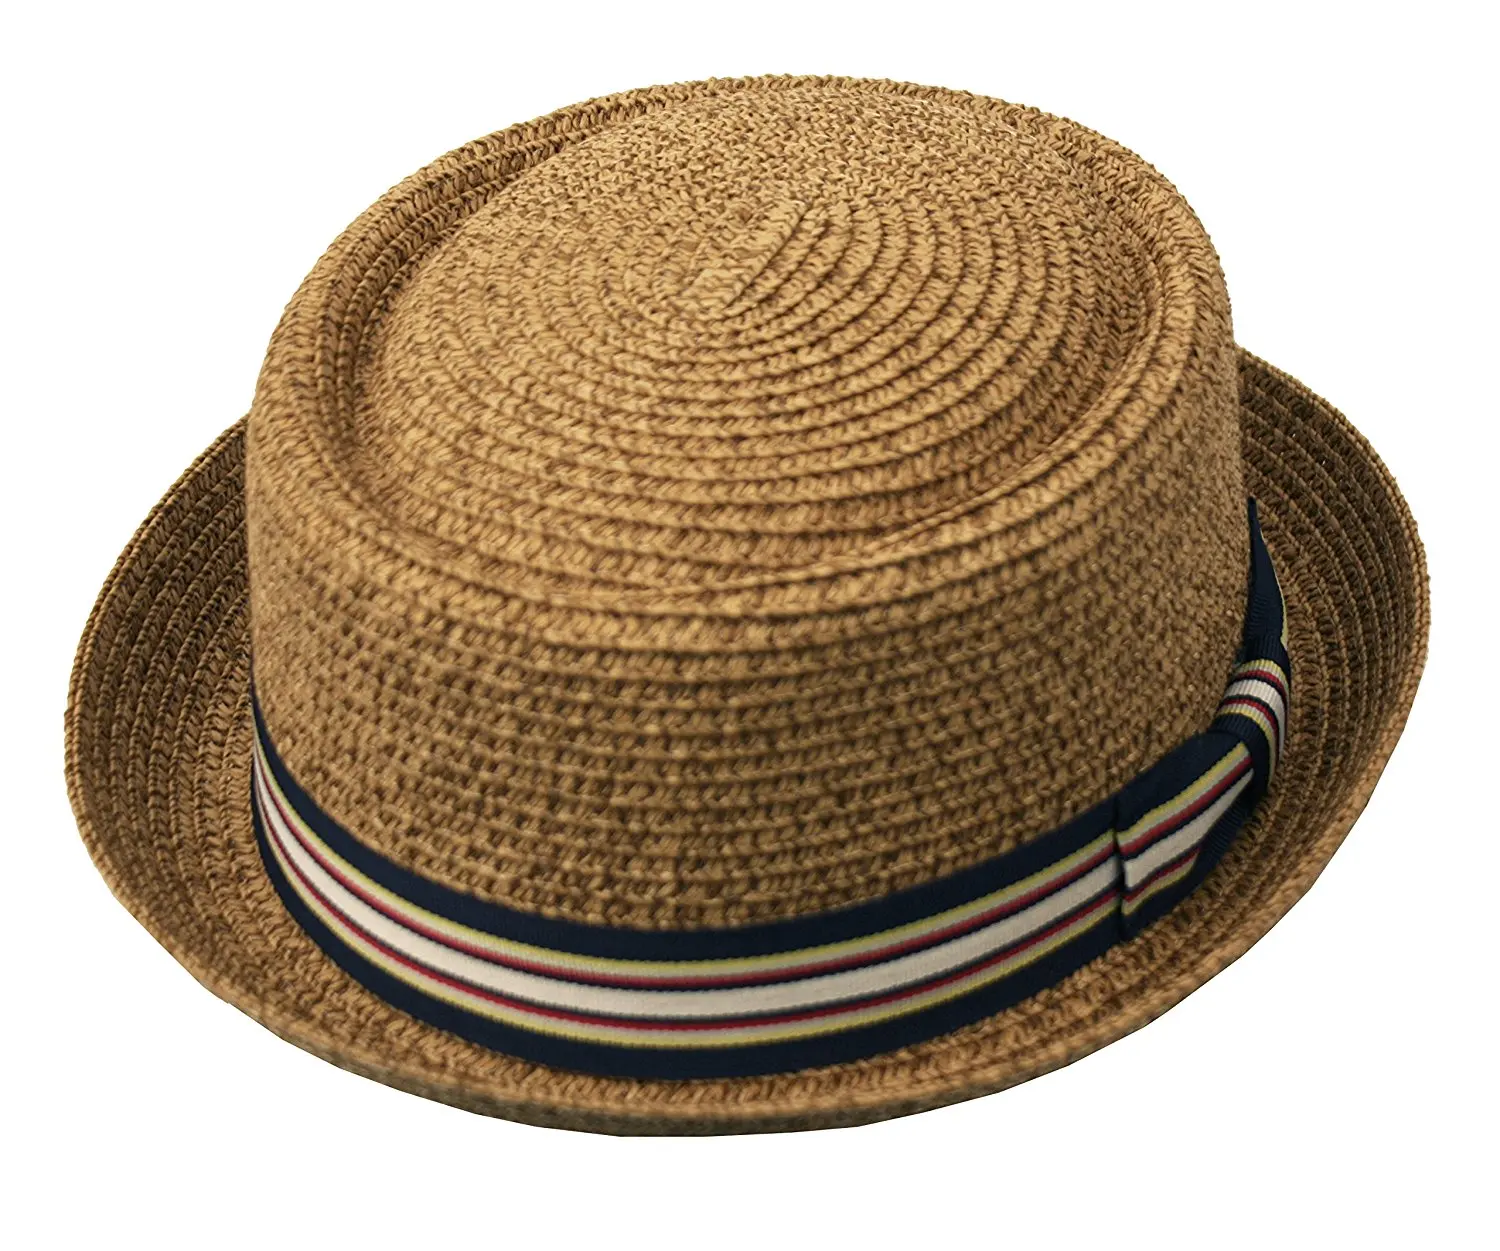 Шляпы оптом. Шляпа мужская летняя порк Пай. Соломенная шляпа порк-Пай. Большая соломенная шляпа японская. Шляпа Федора соломенная с цепочкой.